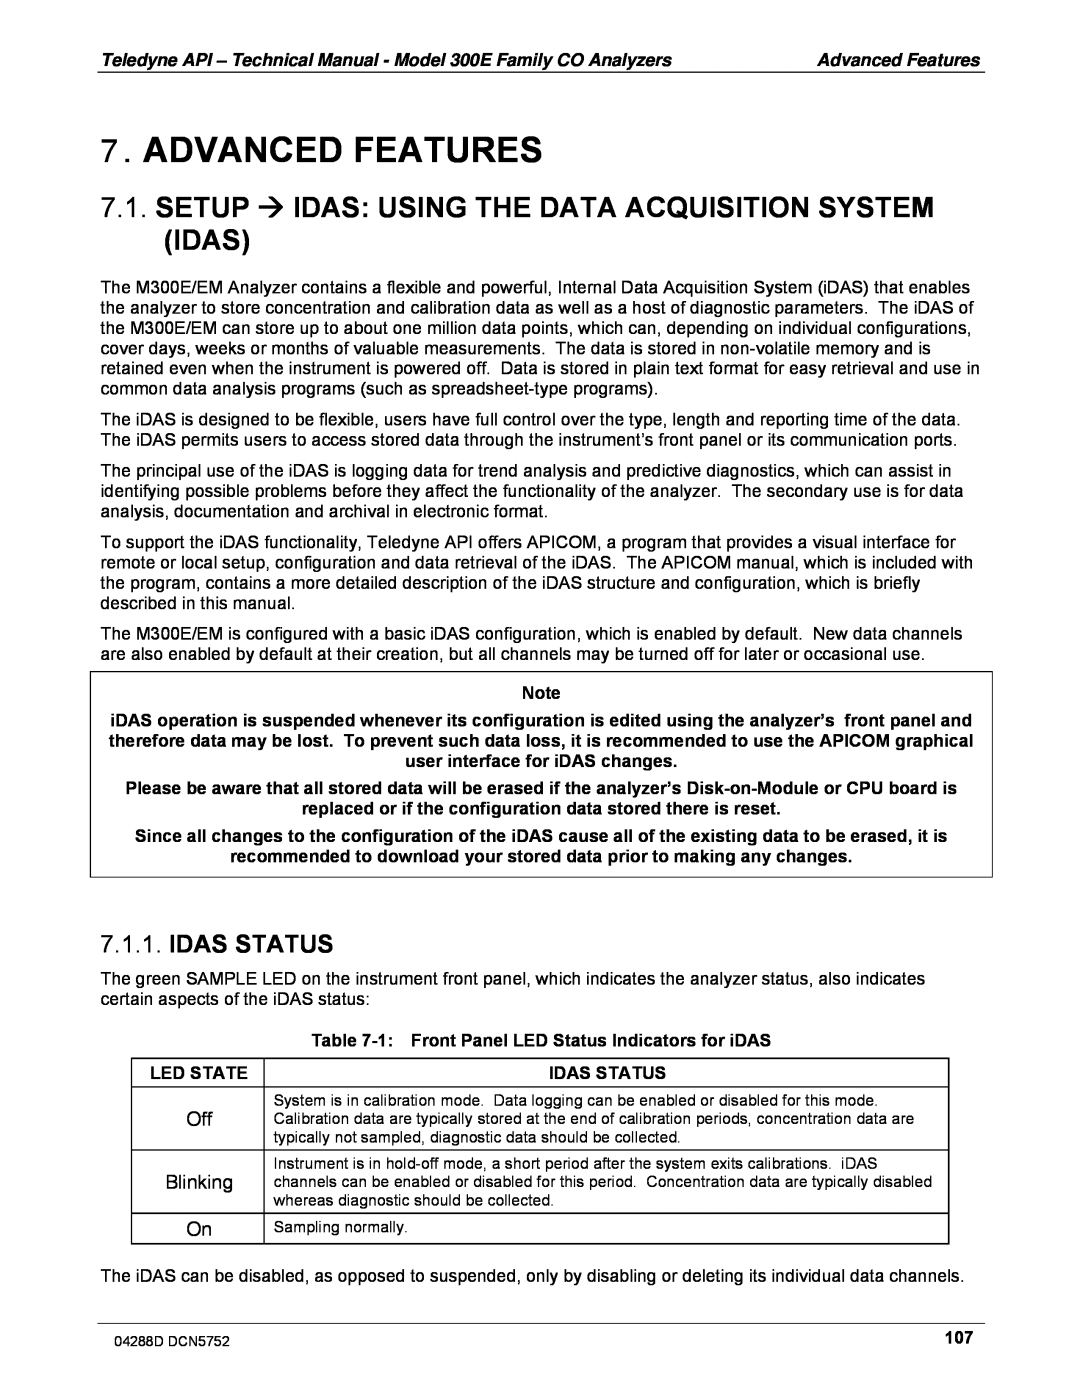 Teledyne M300EM operation manual Advanced Features, Idas Status, Led State 